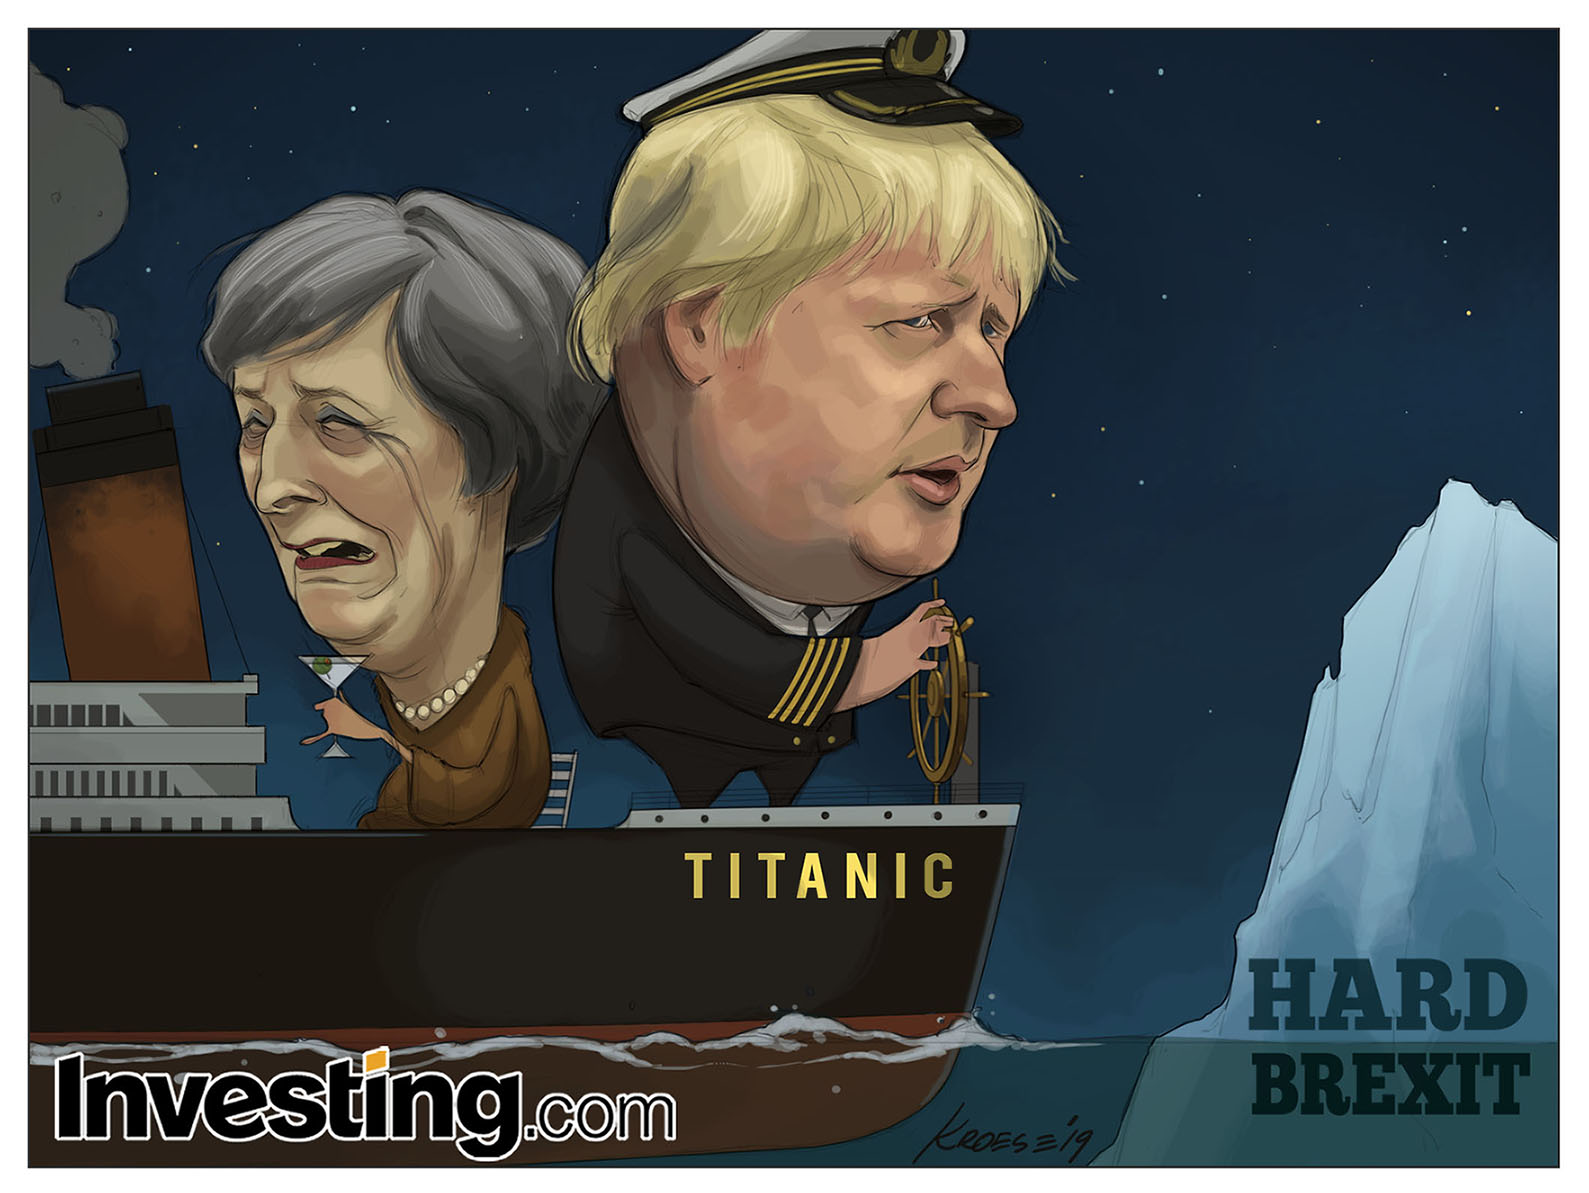 Will Boris Johnson steer the UK to a Hard Brexit?